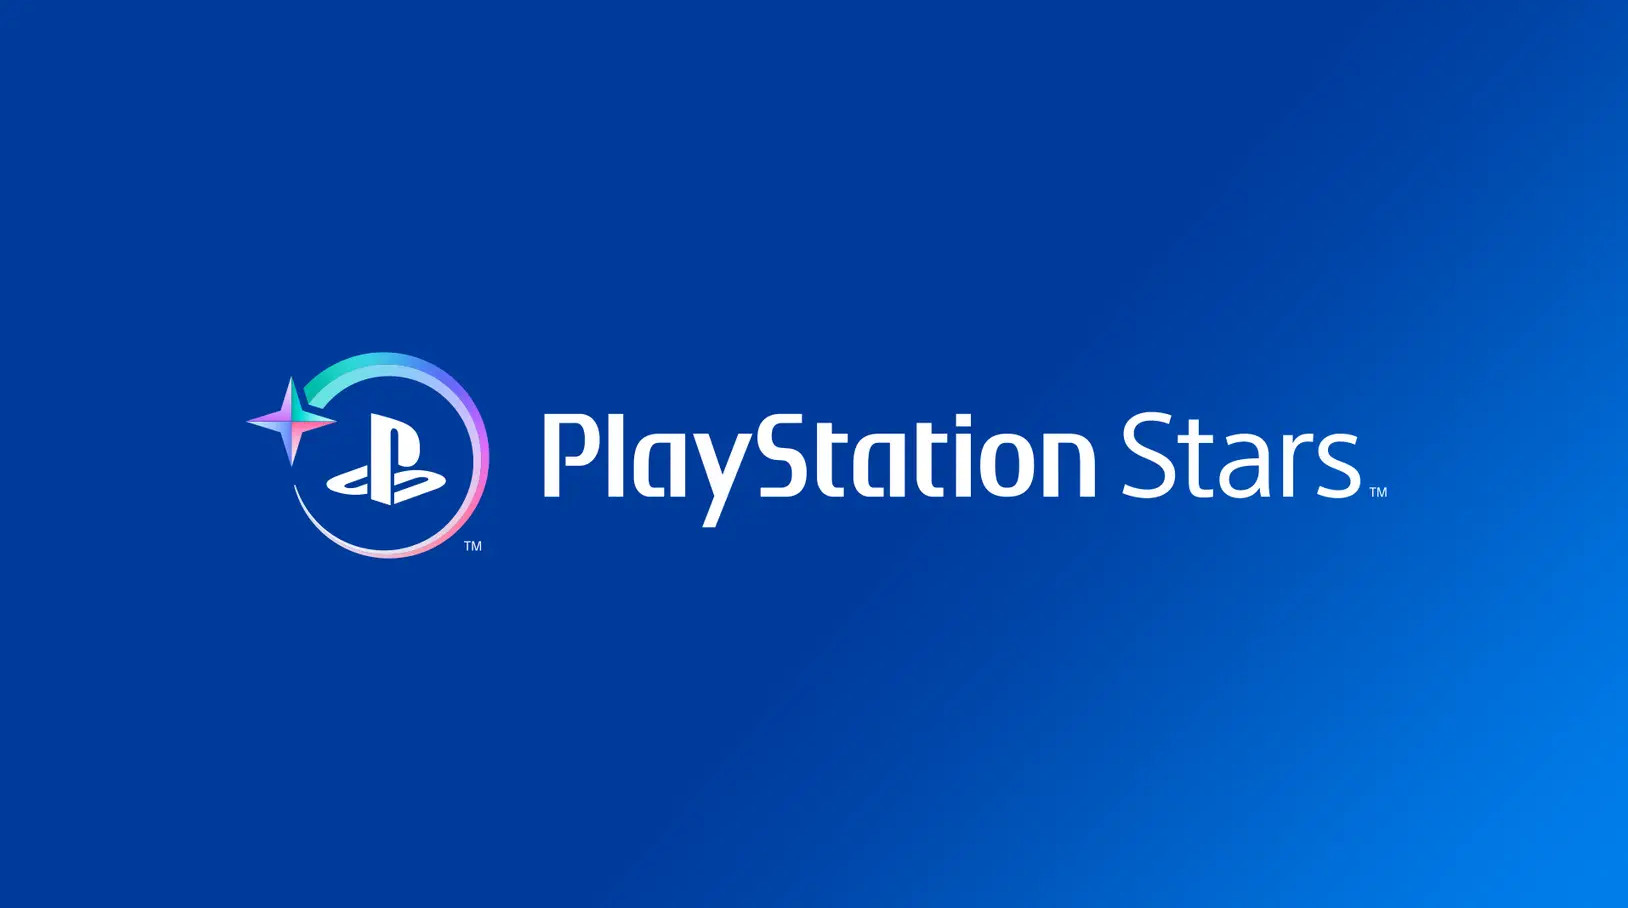 索尼公布新的忠诚计划“PlayStation Stars” 面向PlayStation用户